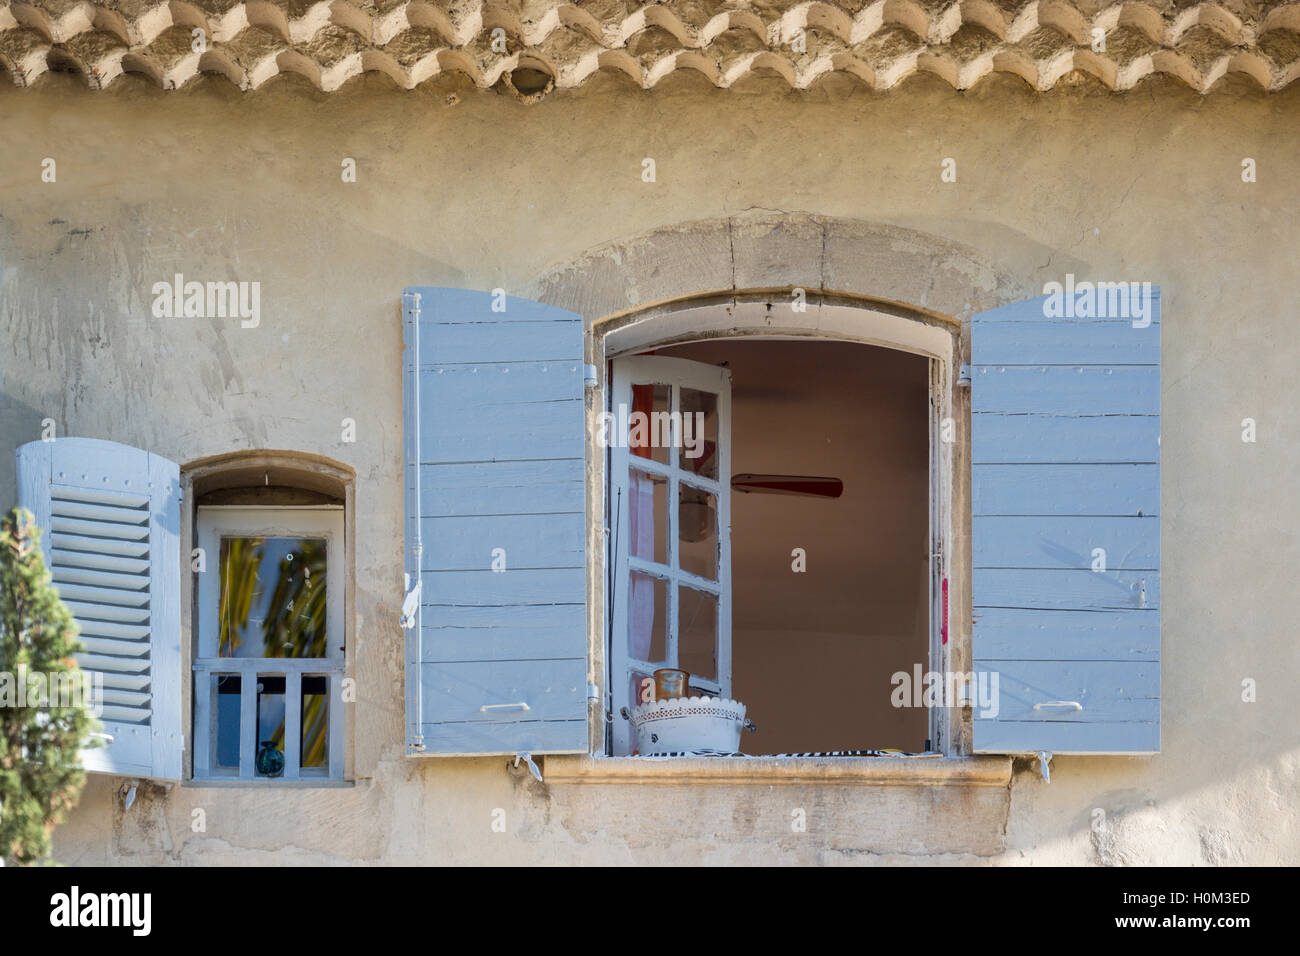 Fenêtres et volets style Provence, Lourmarin, Luberon, Provence, France Banque D'Images